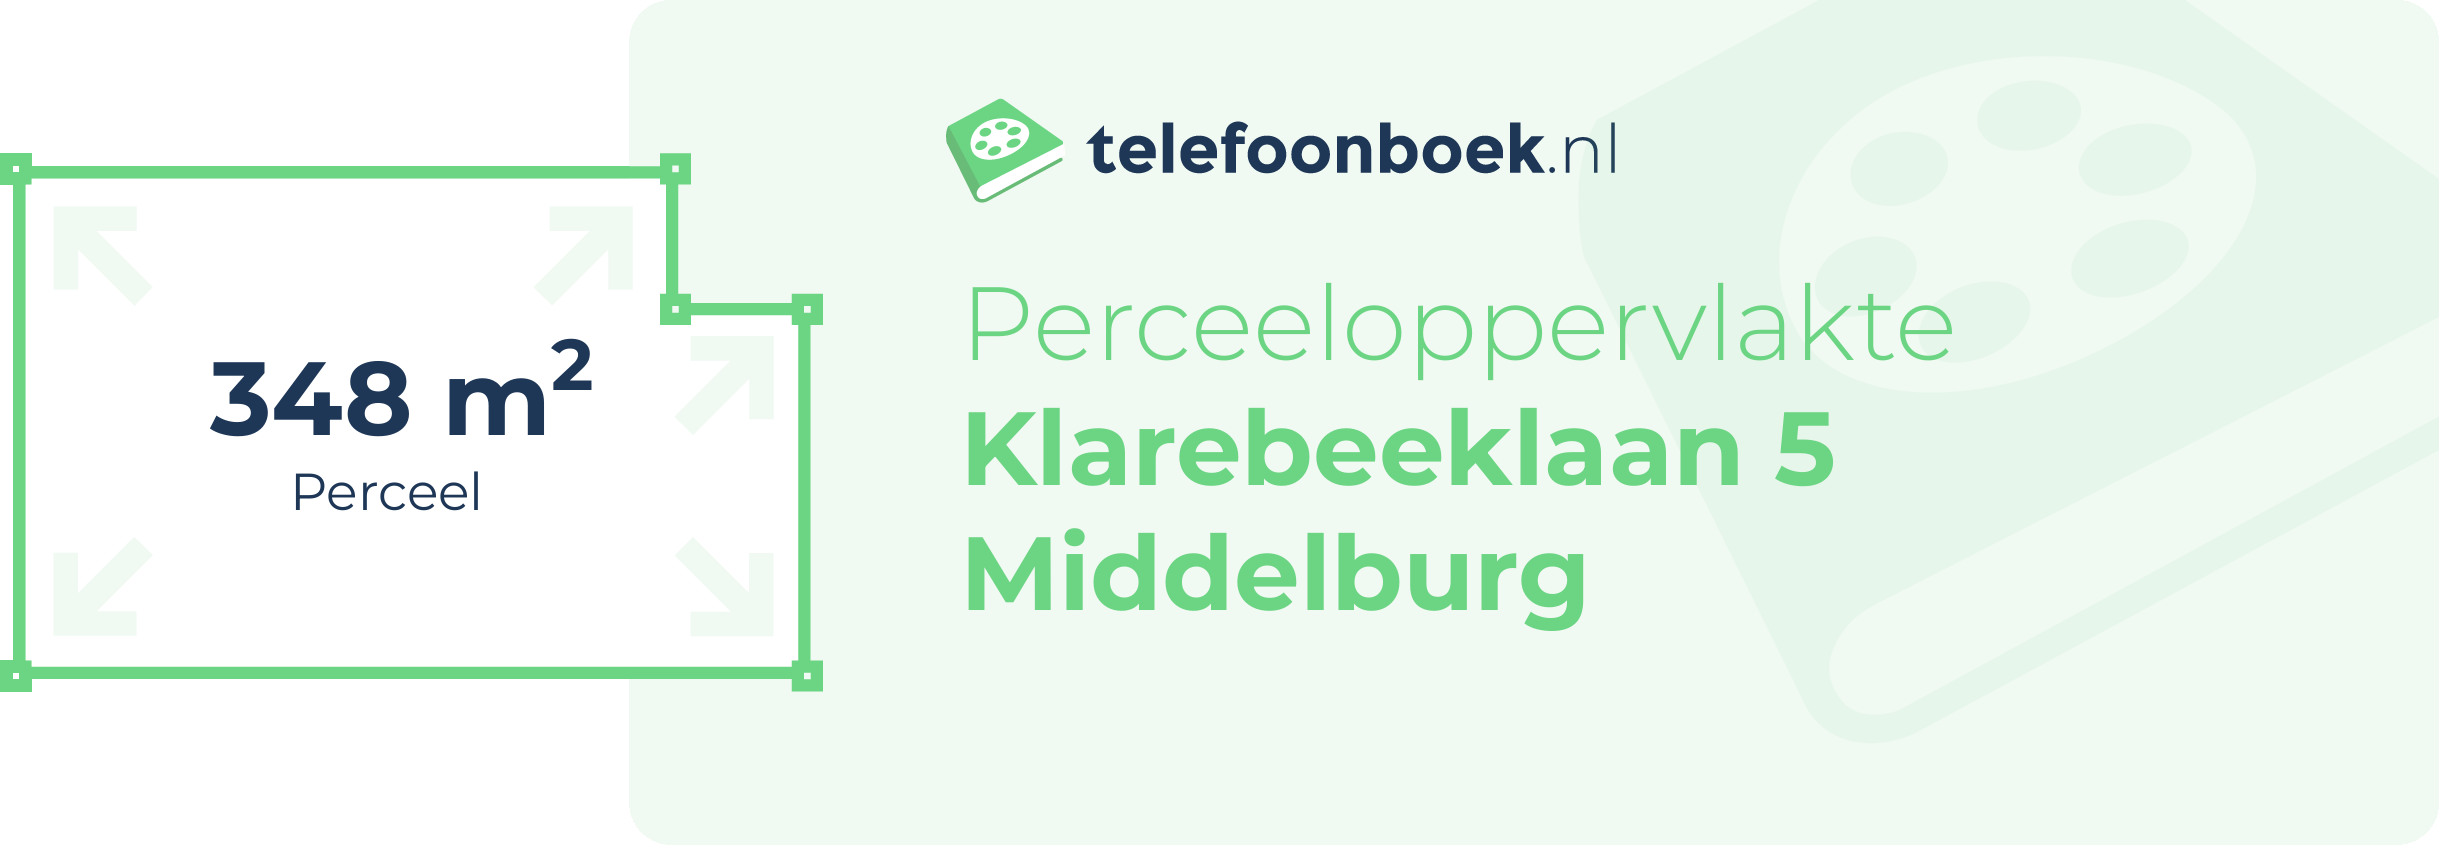 Perceeloppervlakte Klarebeeklaan 5 Middelburg